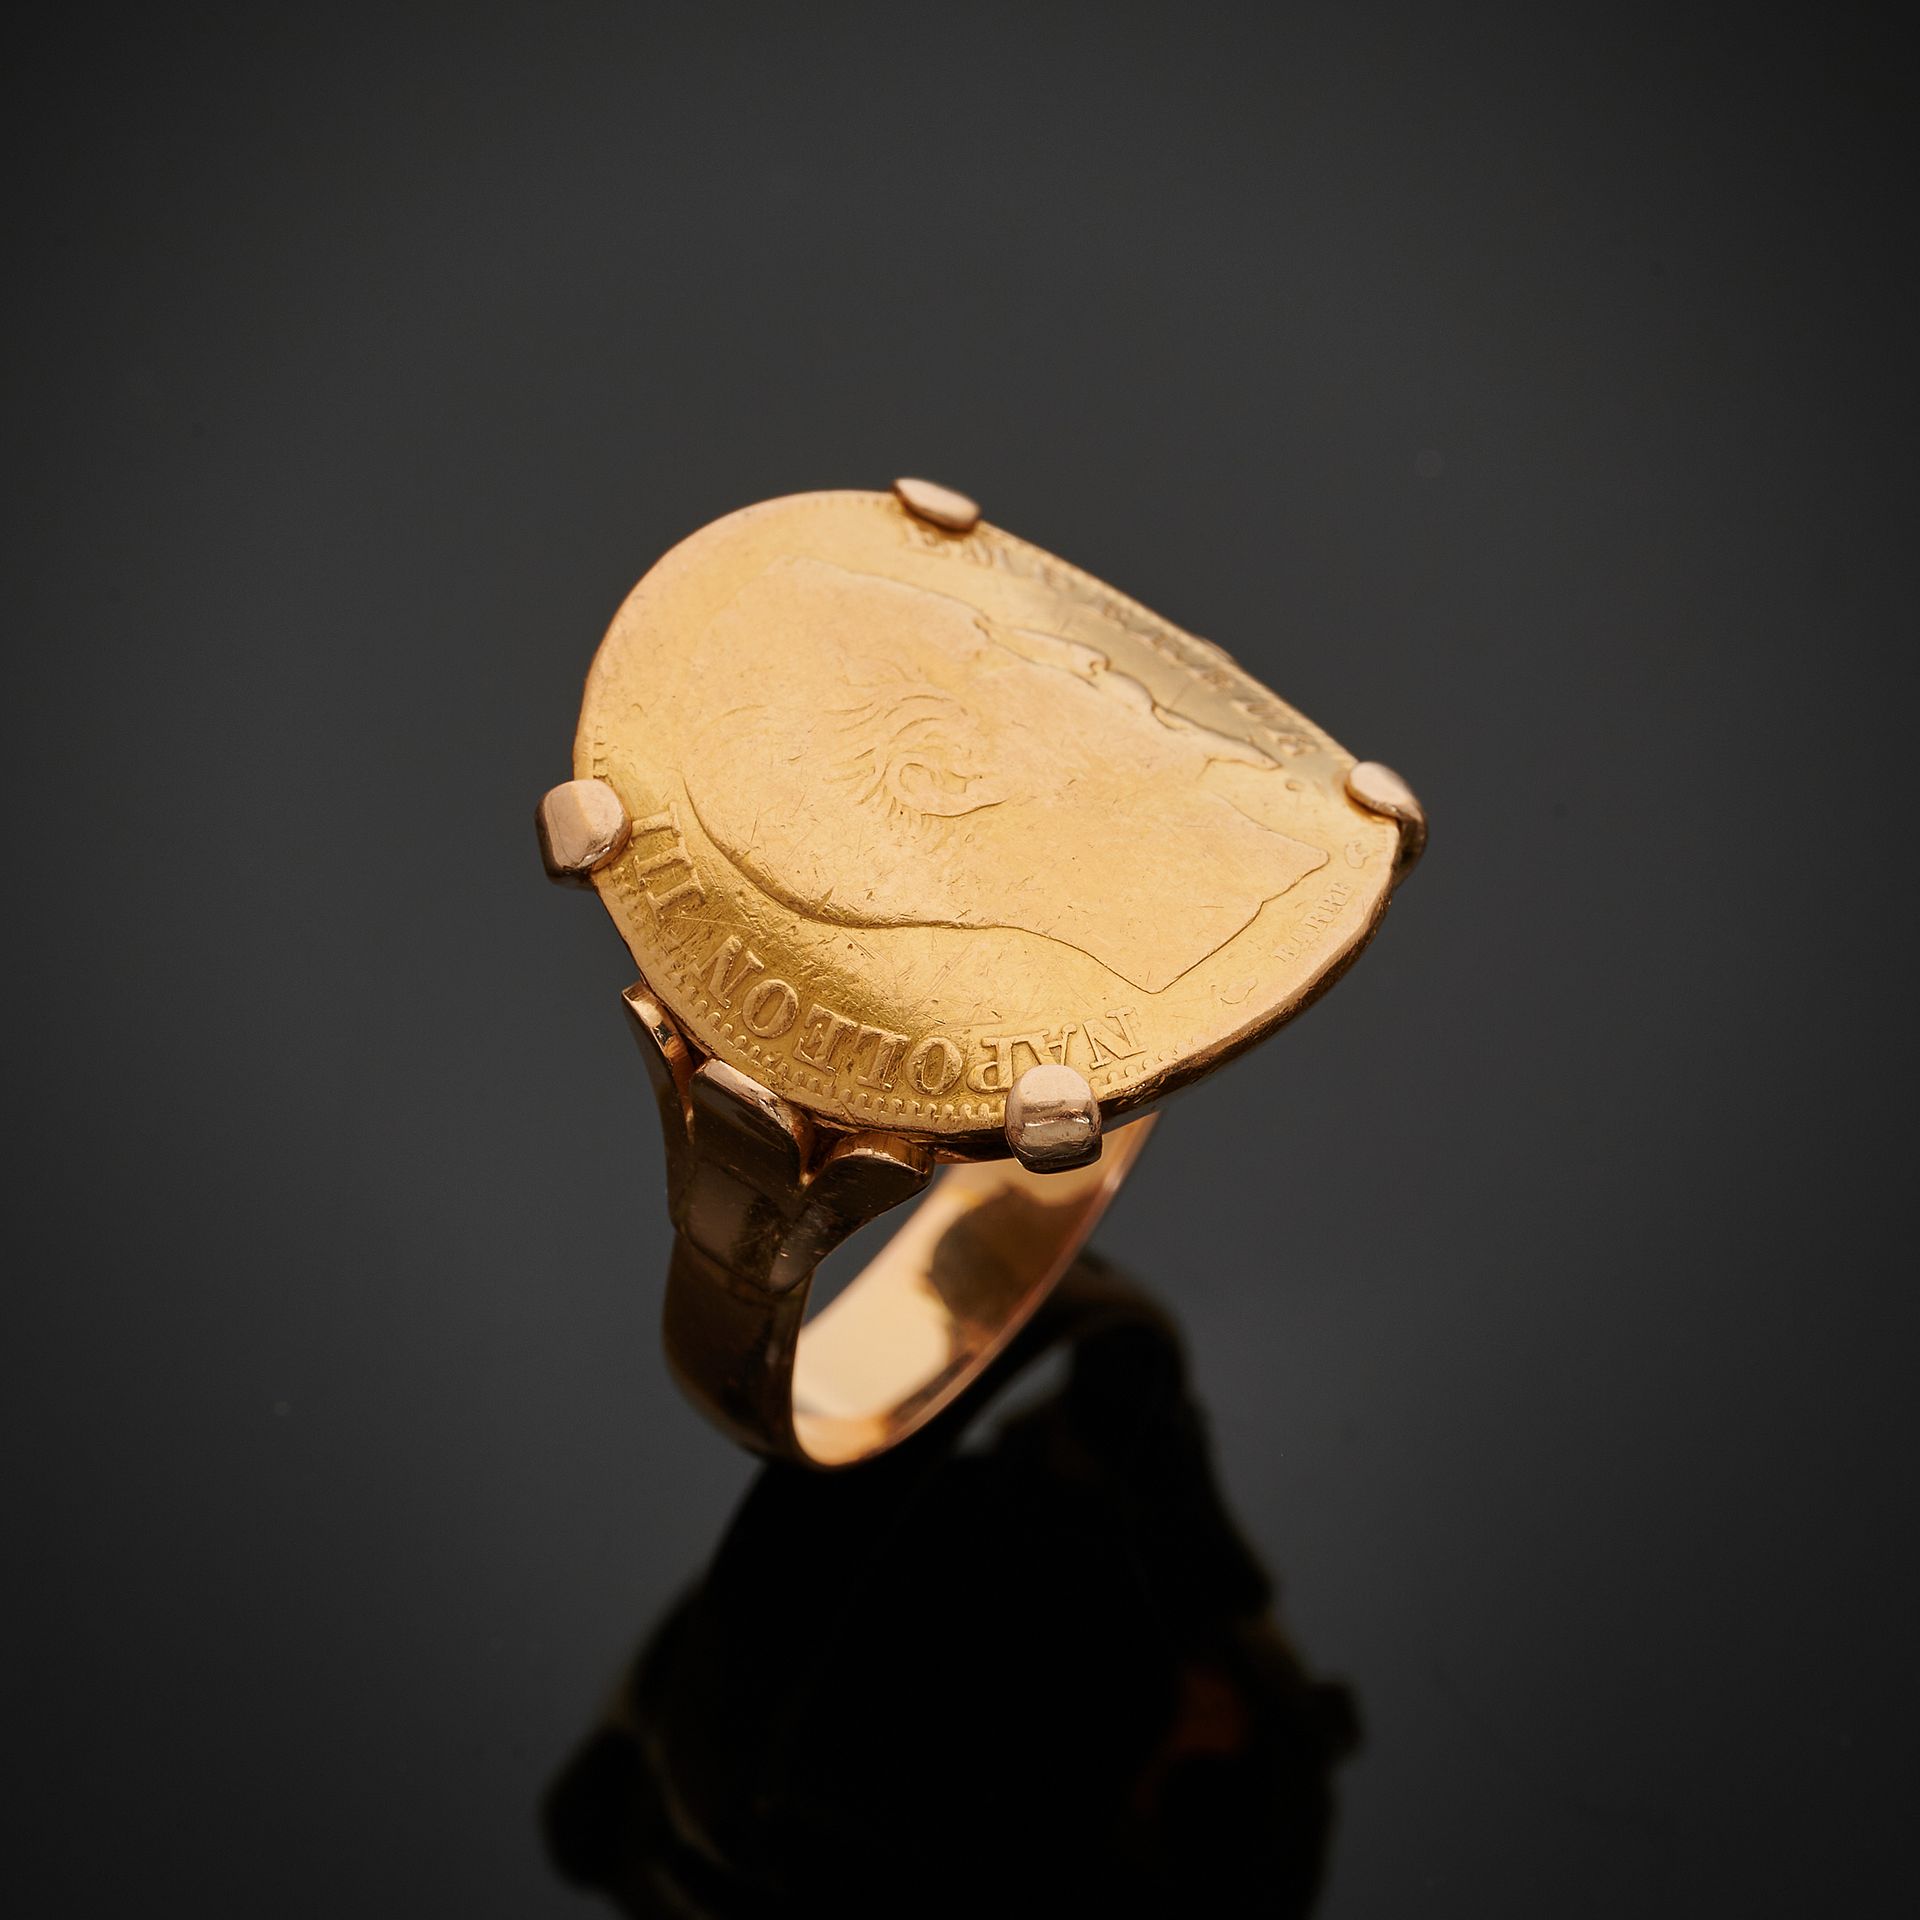 Null 750毫米的金戒指，装饰着一个弯曲的拿破仑，处于磨损状态。
磨损程度：56
900毫米的黄金净重：6.35克
750毫米的黄金净重 : 7,9克